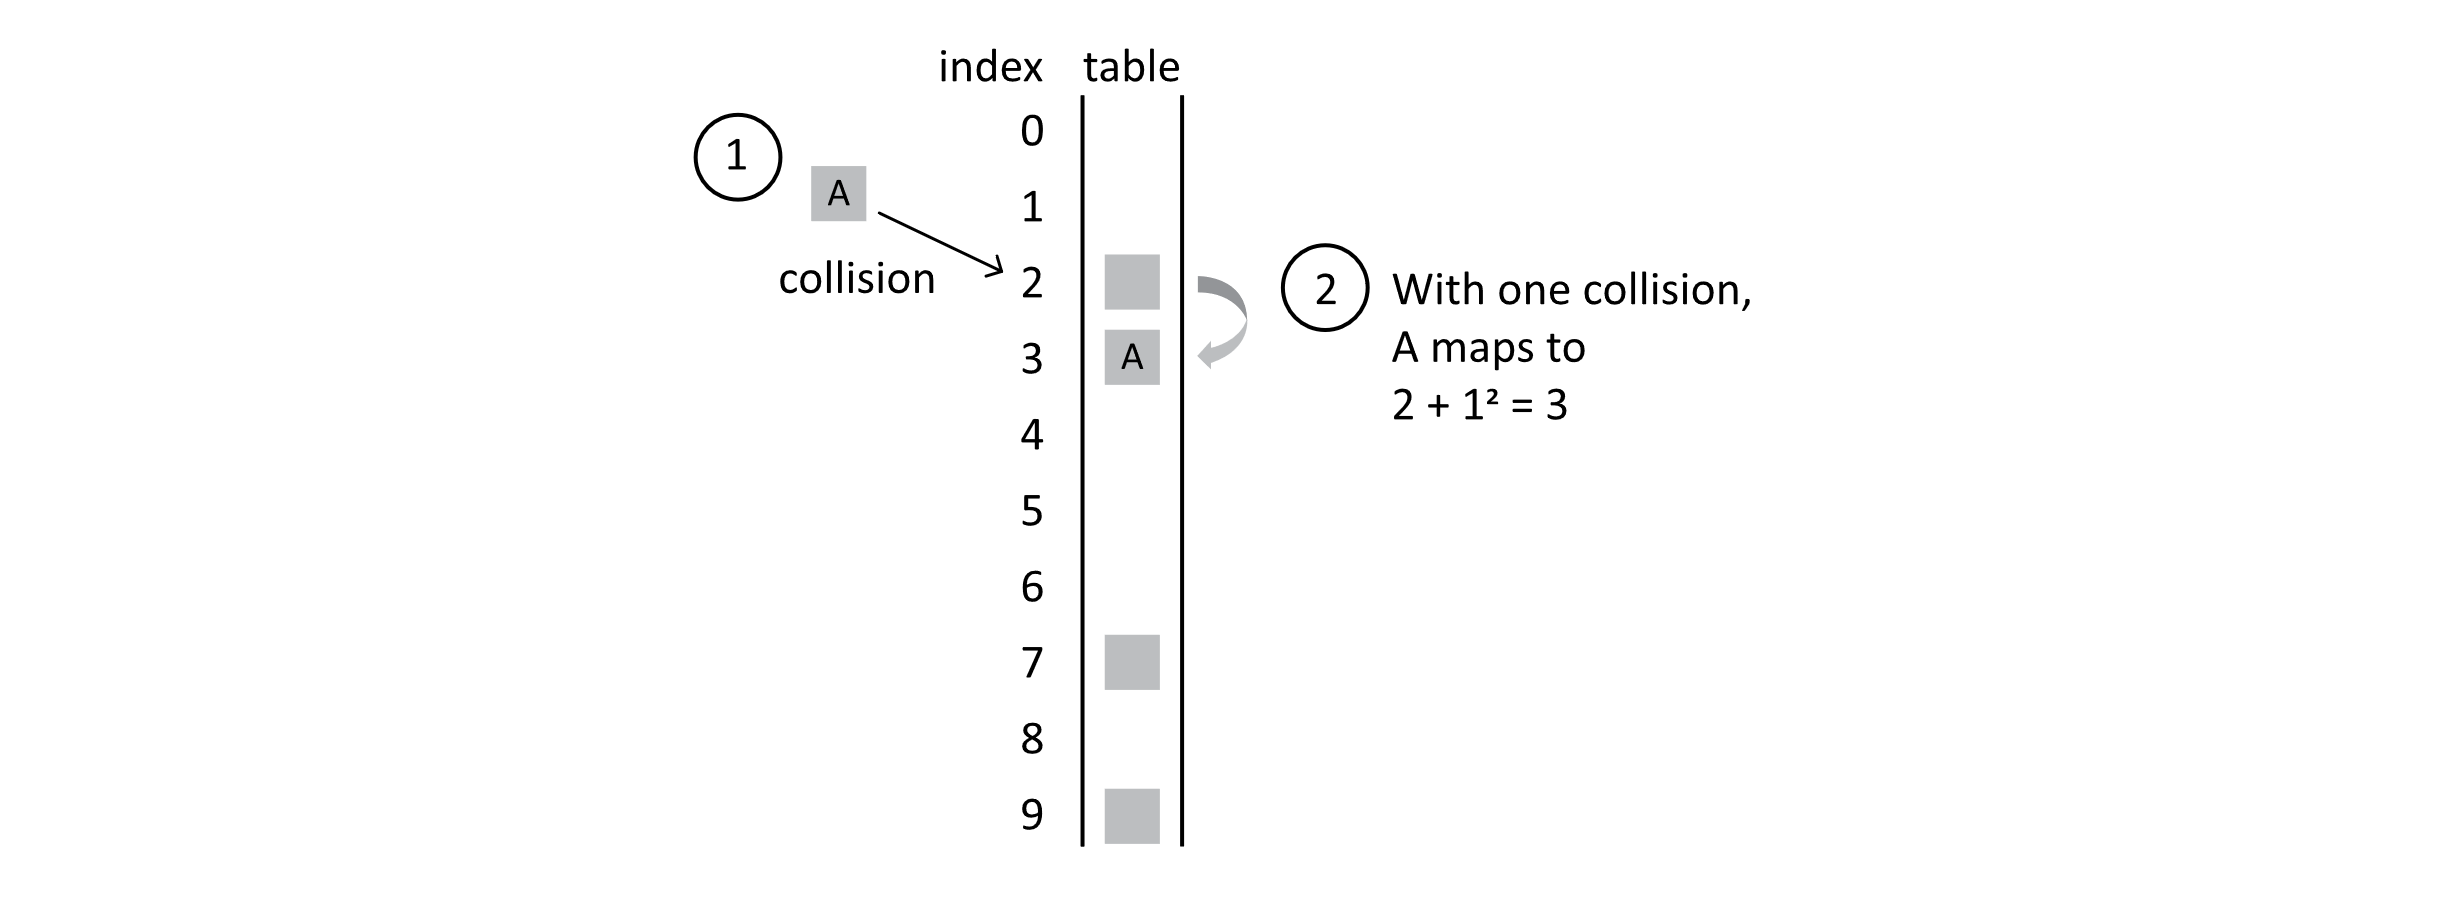 Quadratice probing generates a differnt probe sequence.